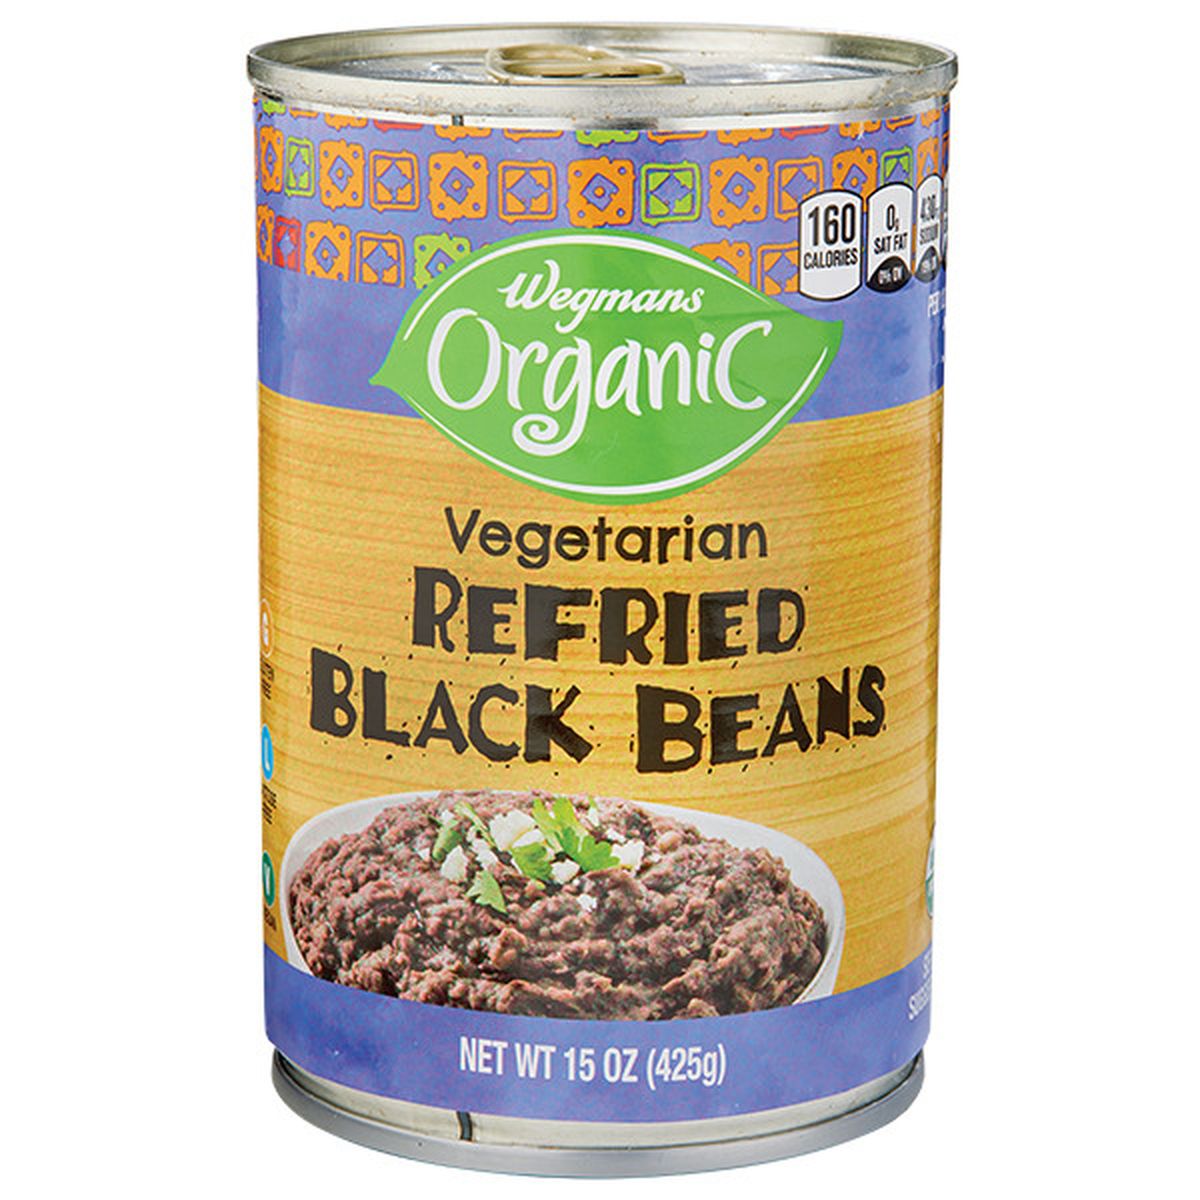 Calories in Wegmans Organic Vegetarian Refried Black Beans